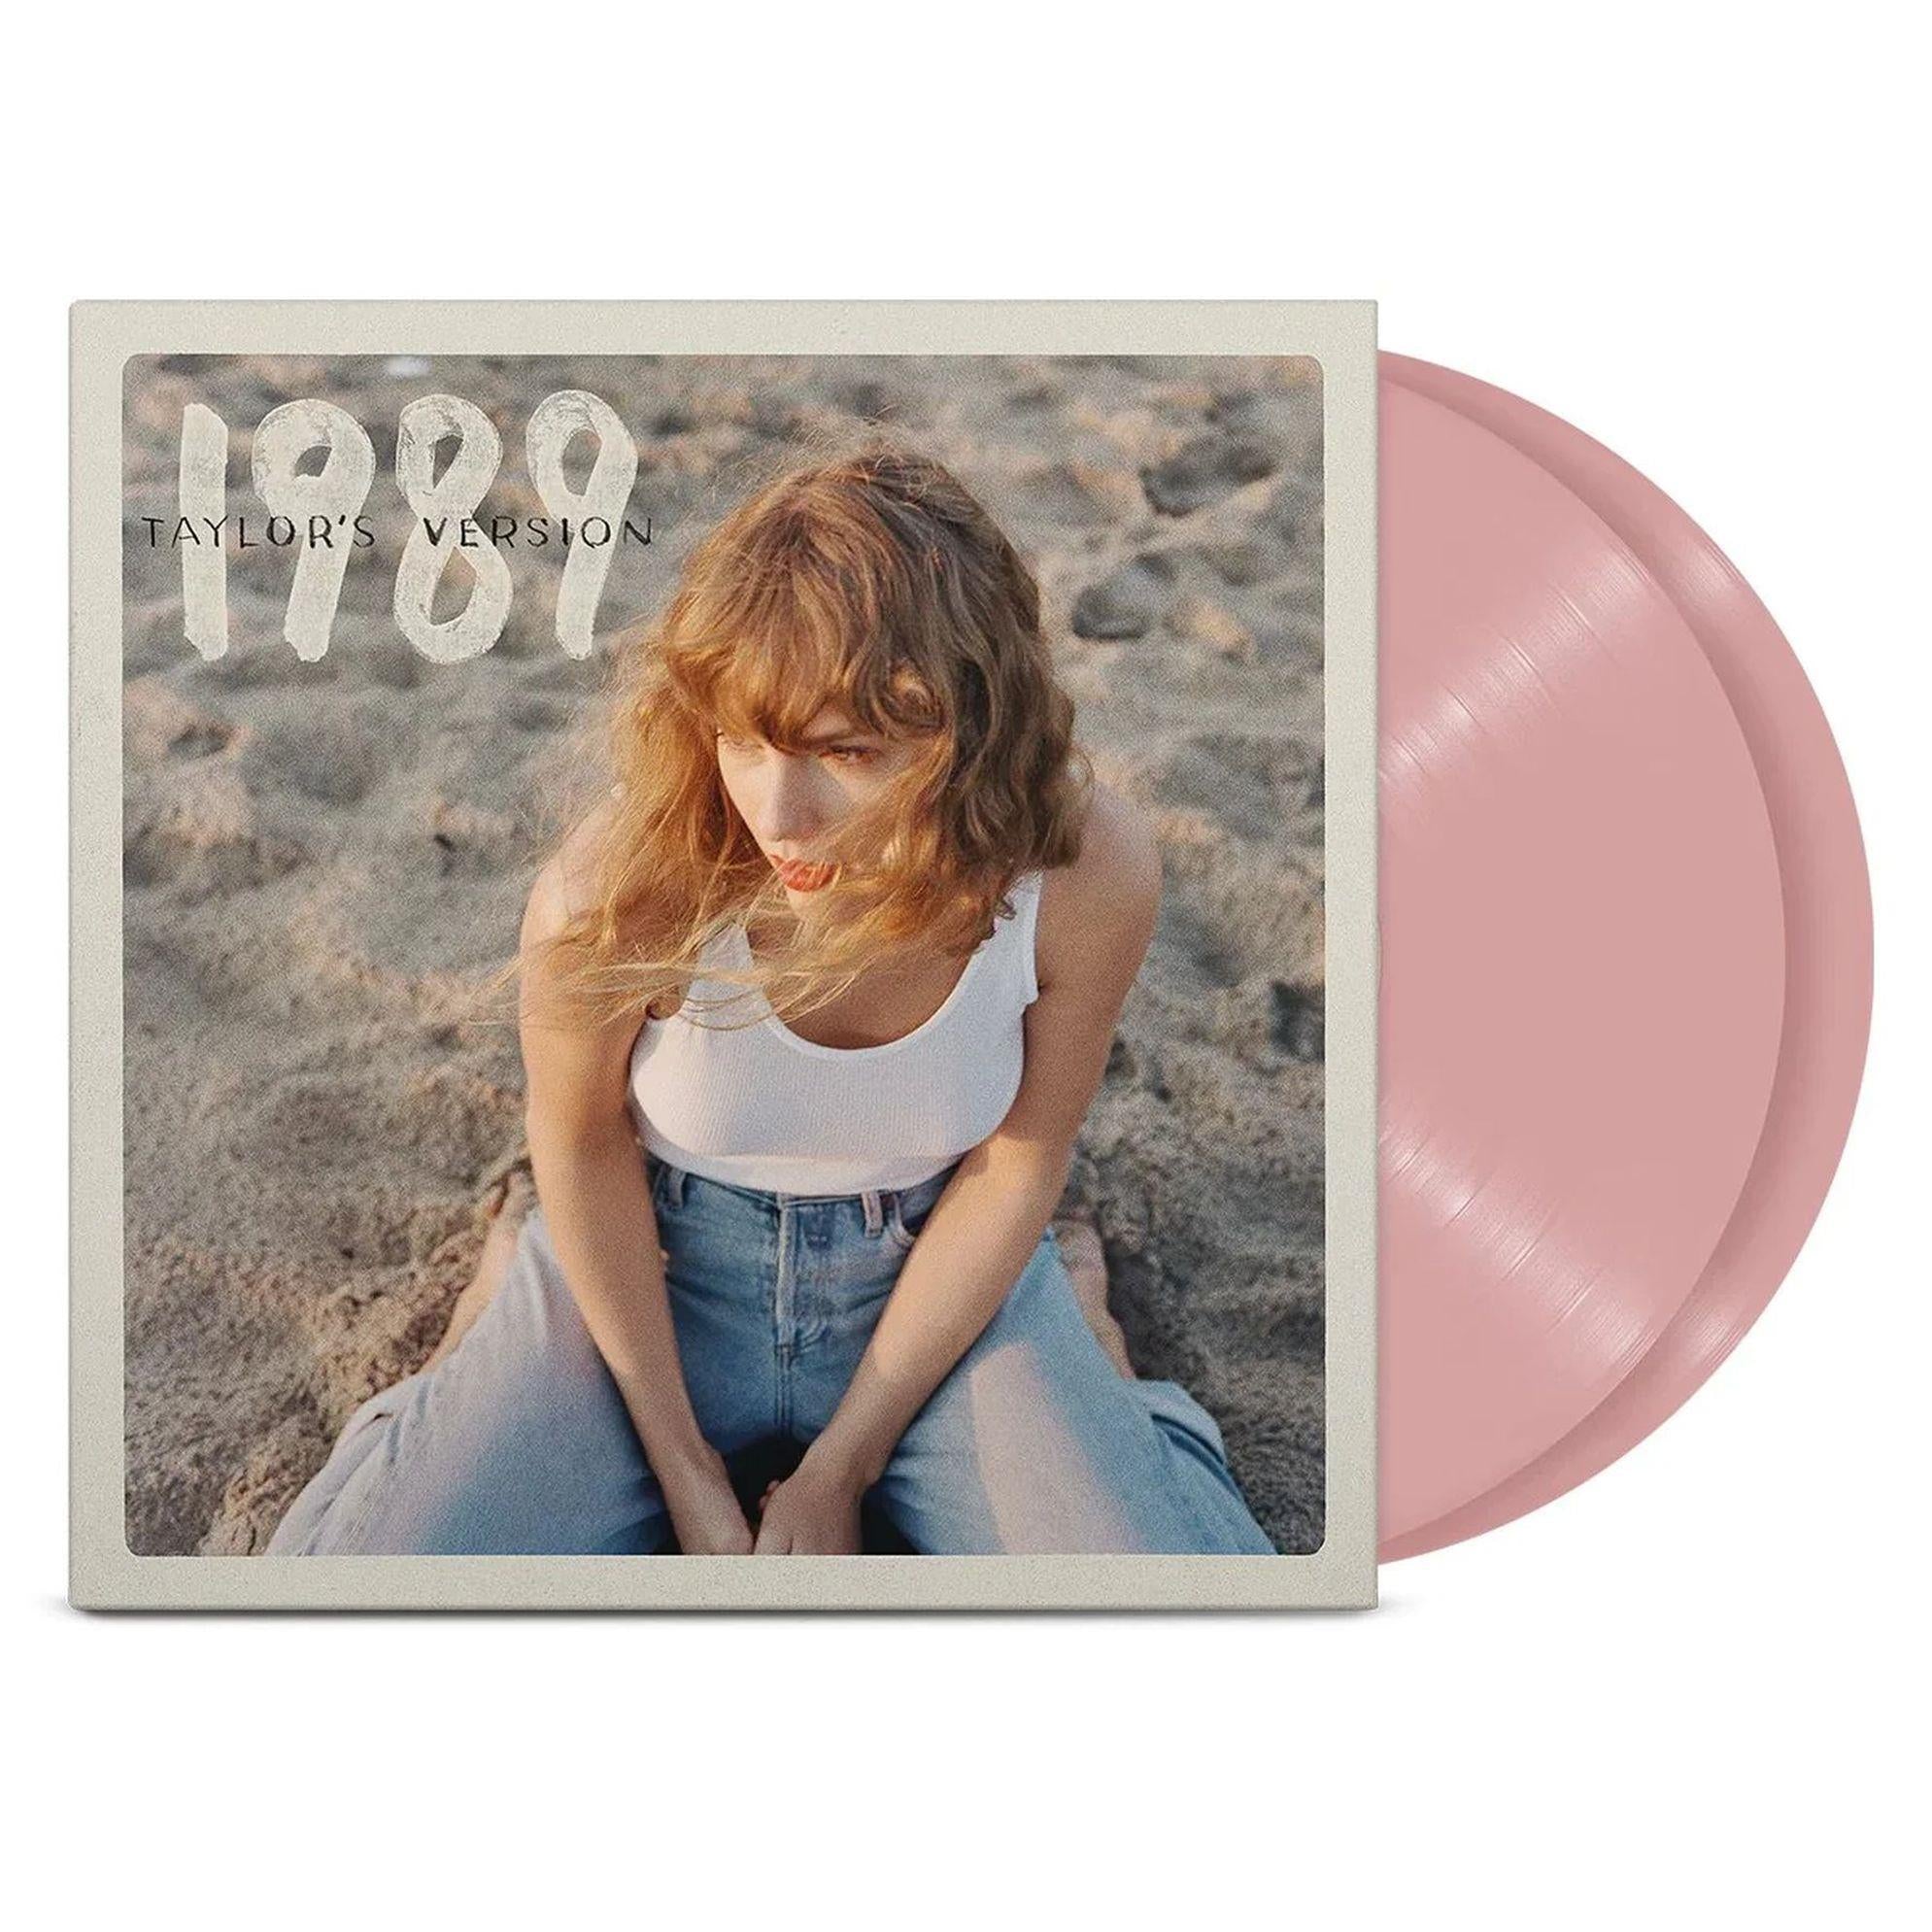 1989 (taylor's version) (rose garden pink vinyl)